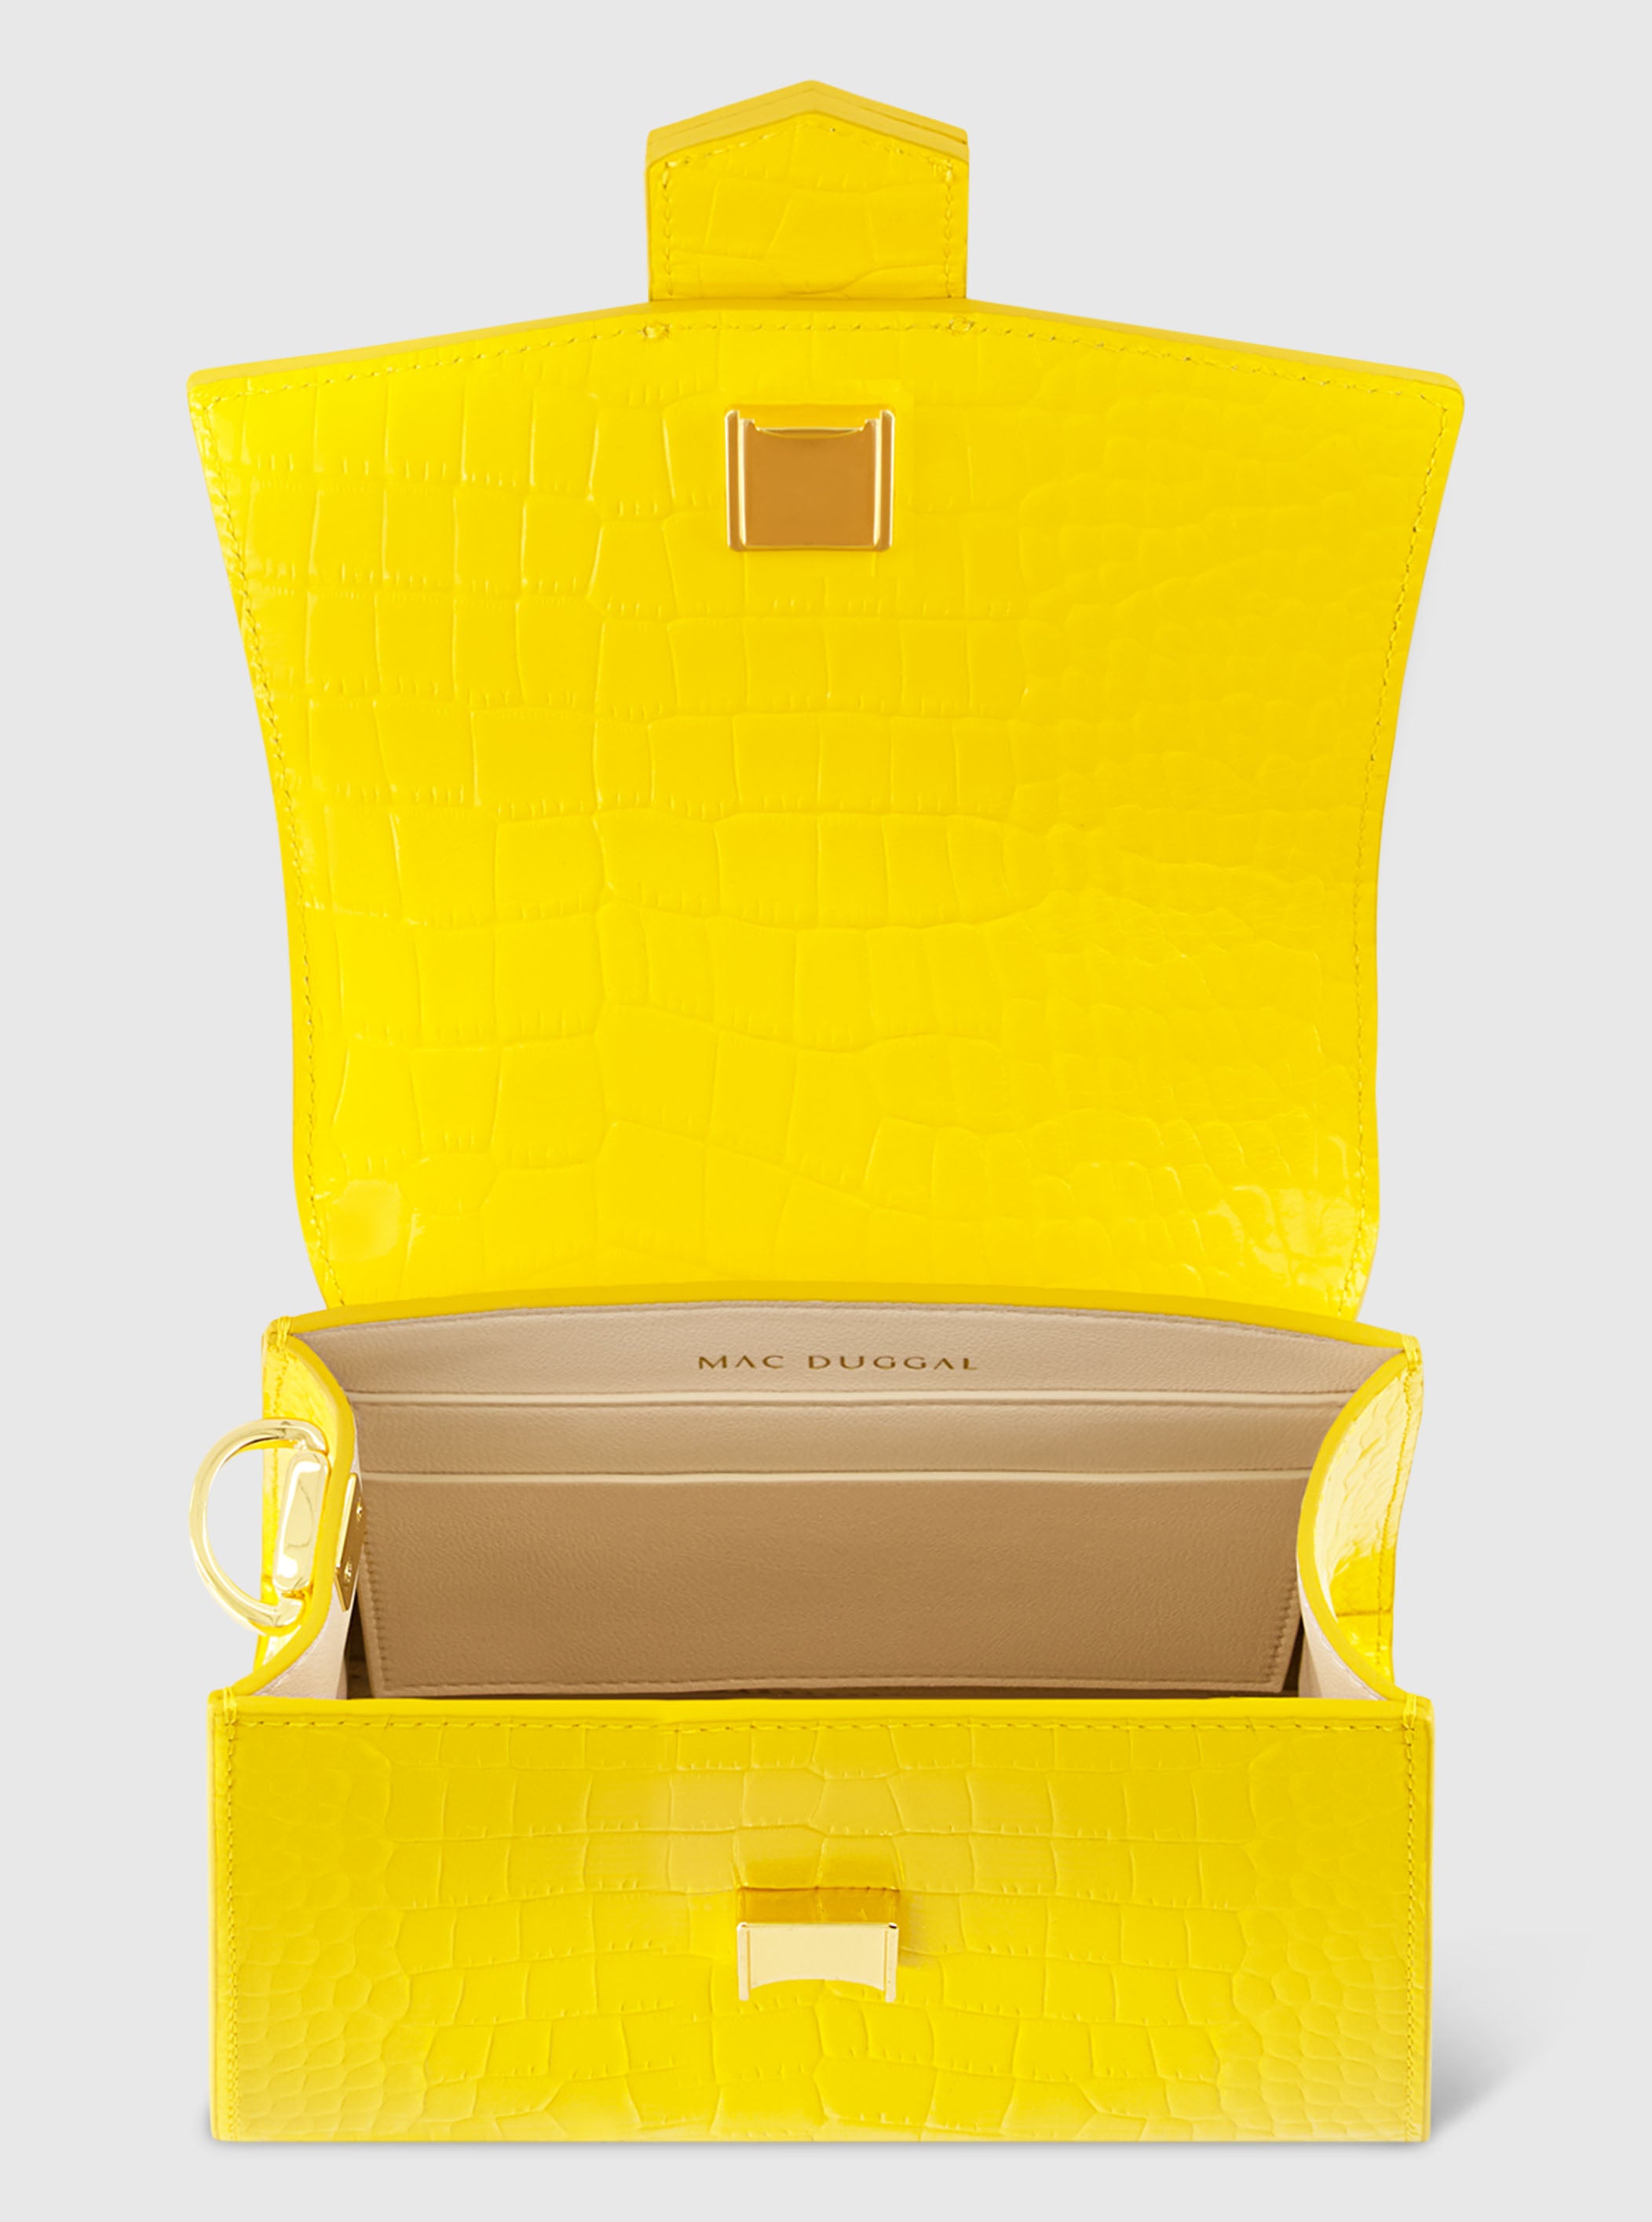 Buckled Mini Croco Leather Handbag with Detachable Strap